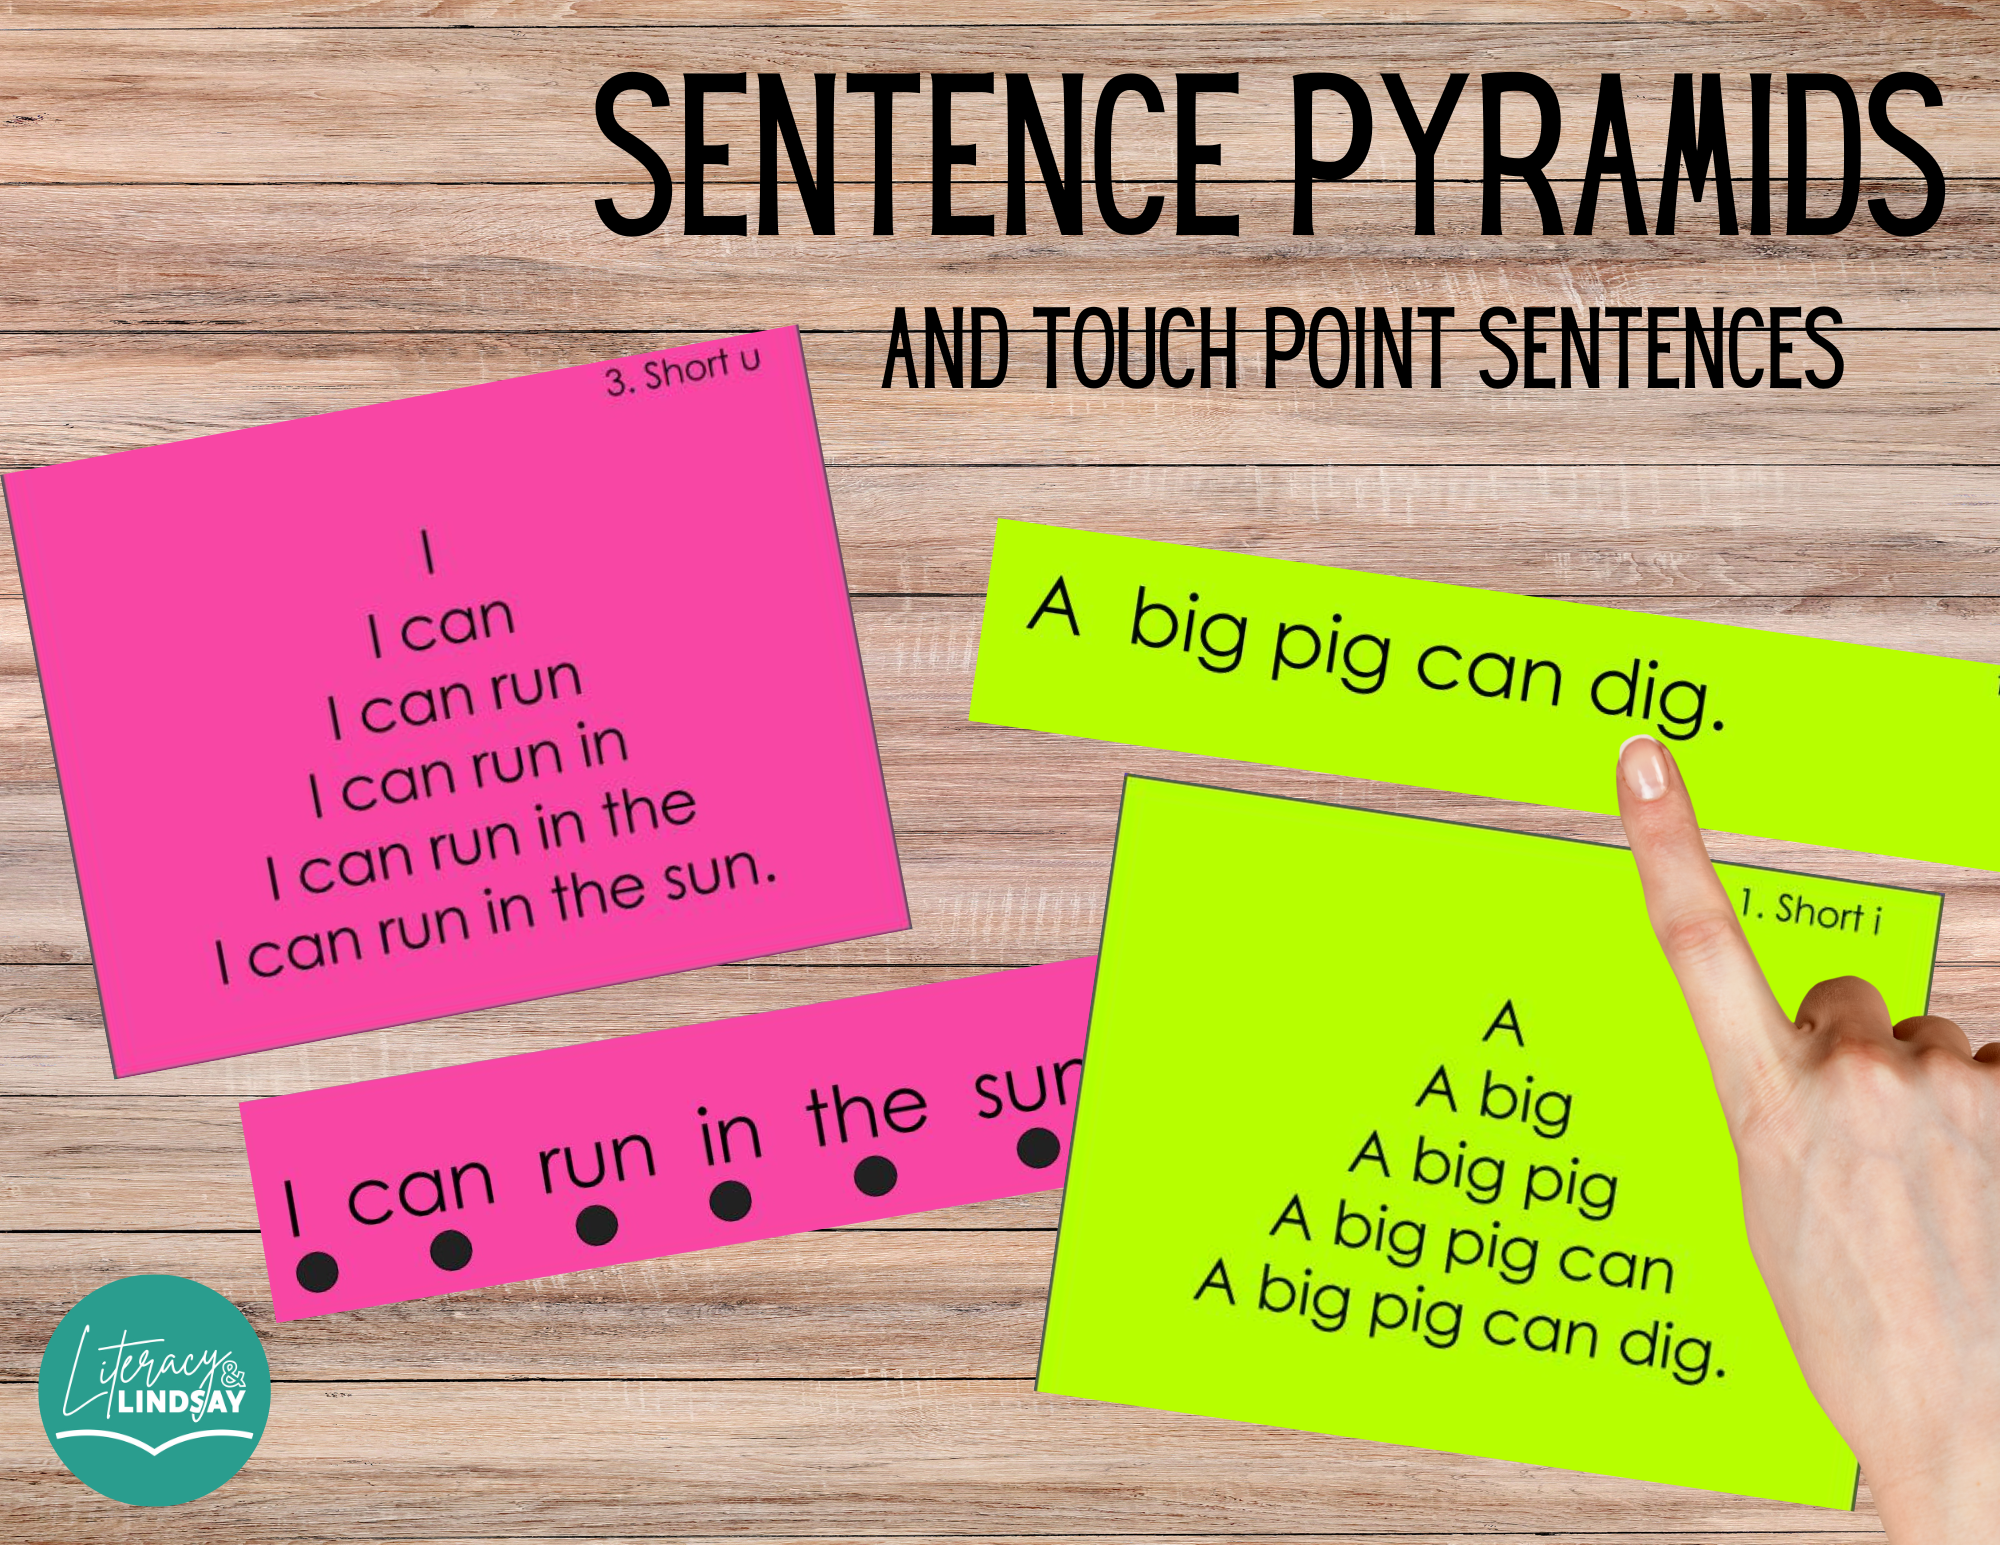 Sentence Pyramids